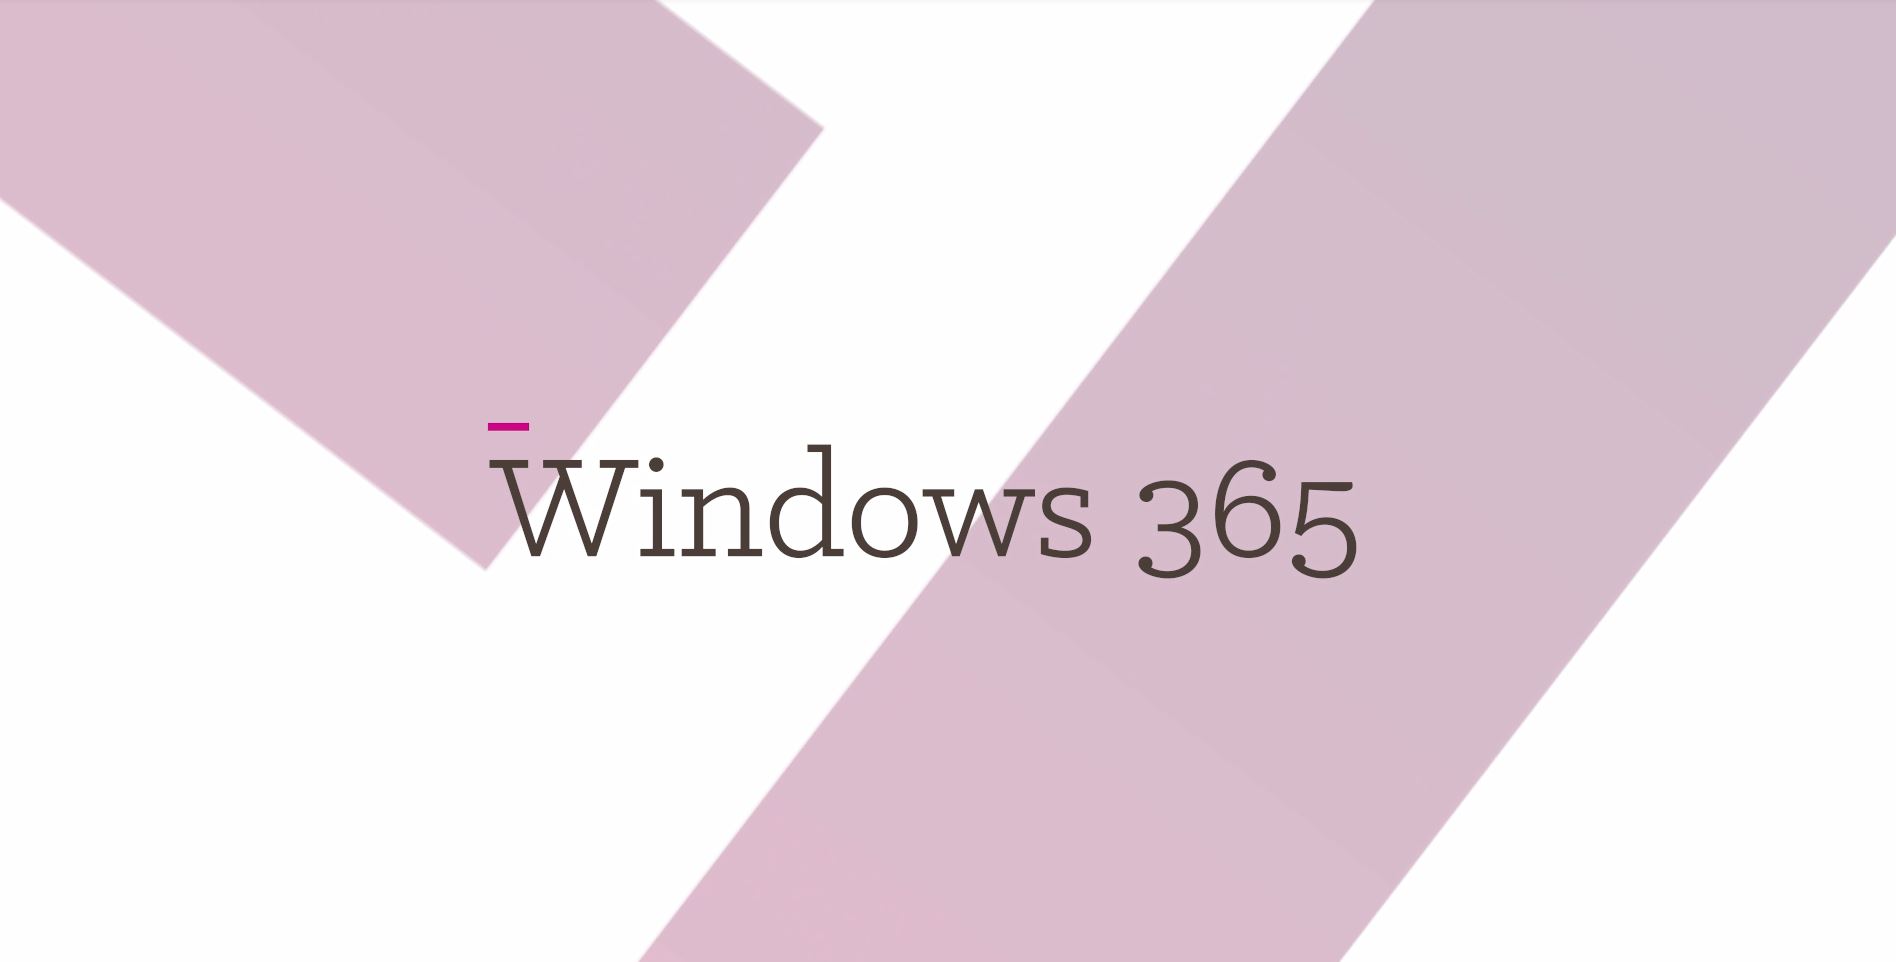 Article Windows 365: Your Cloud PC Image